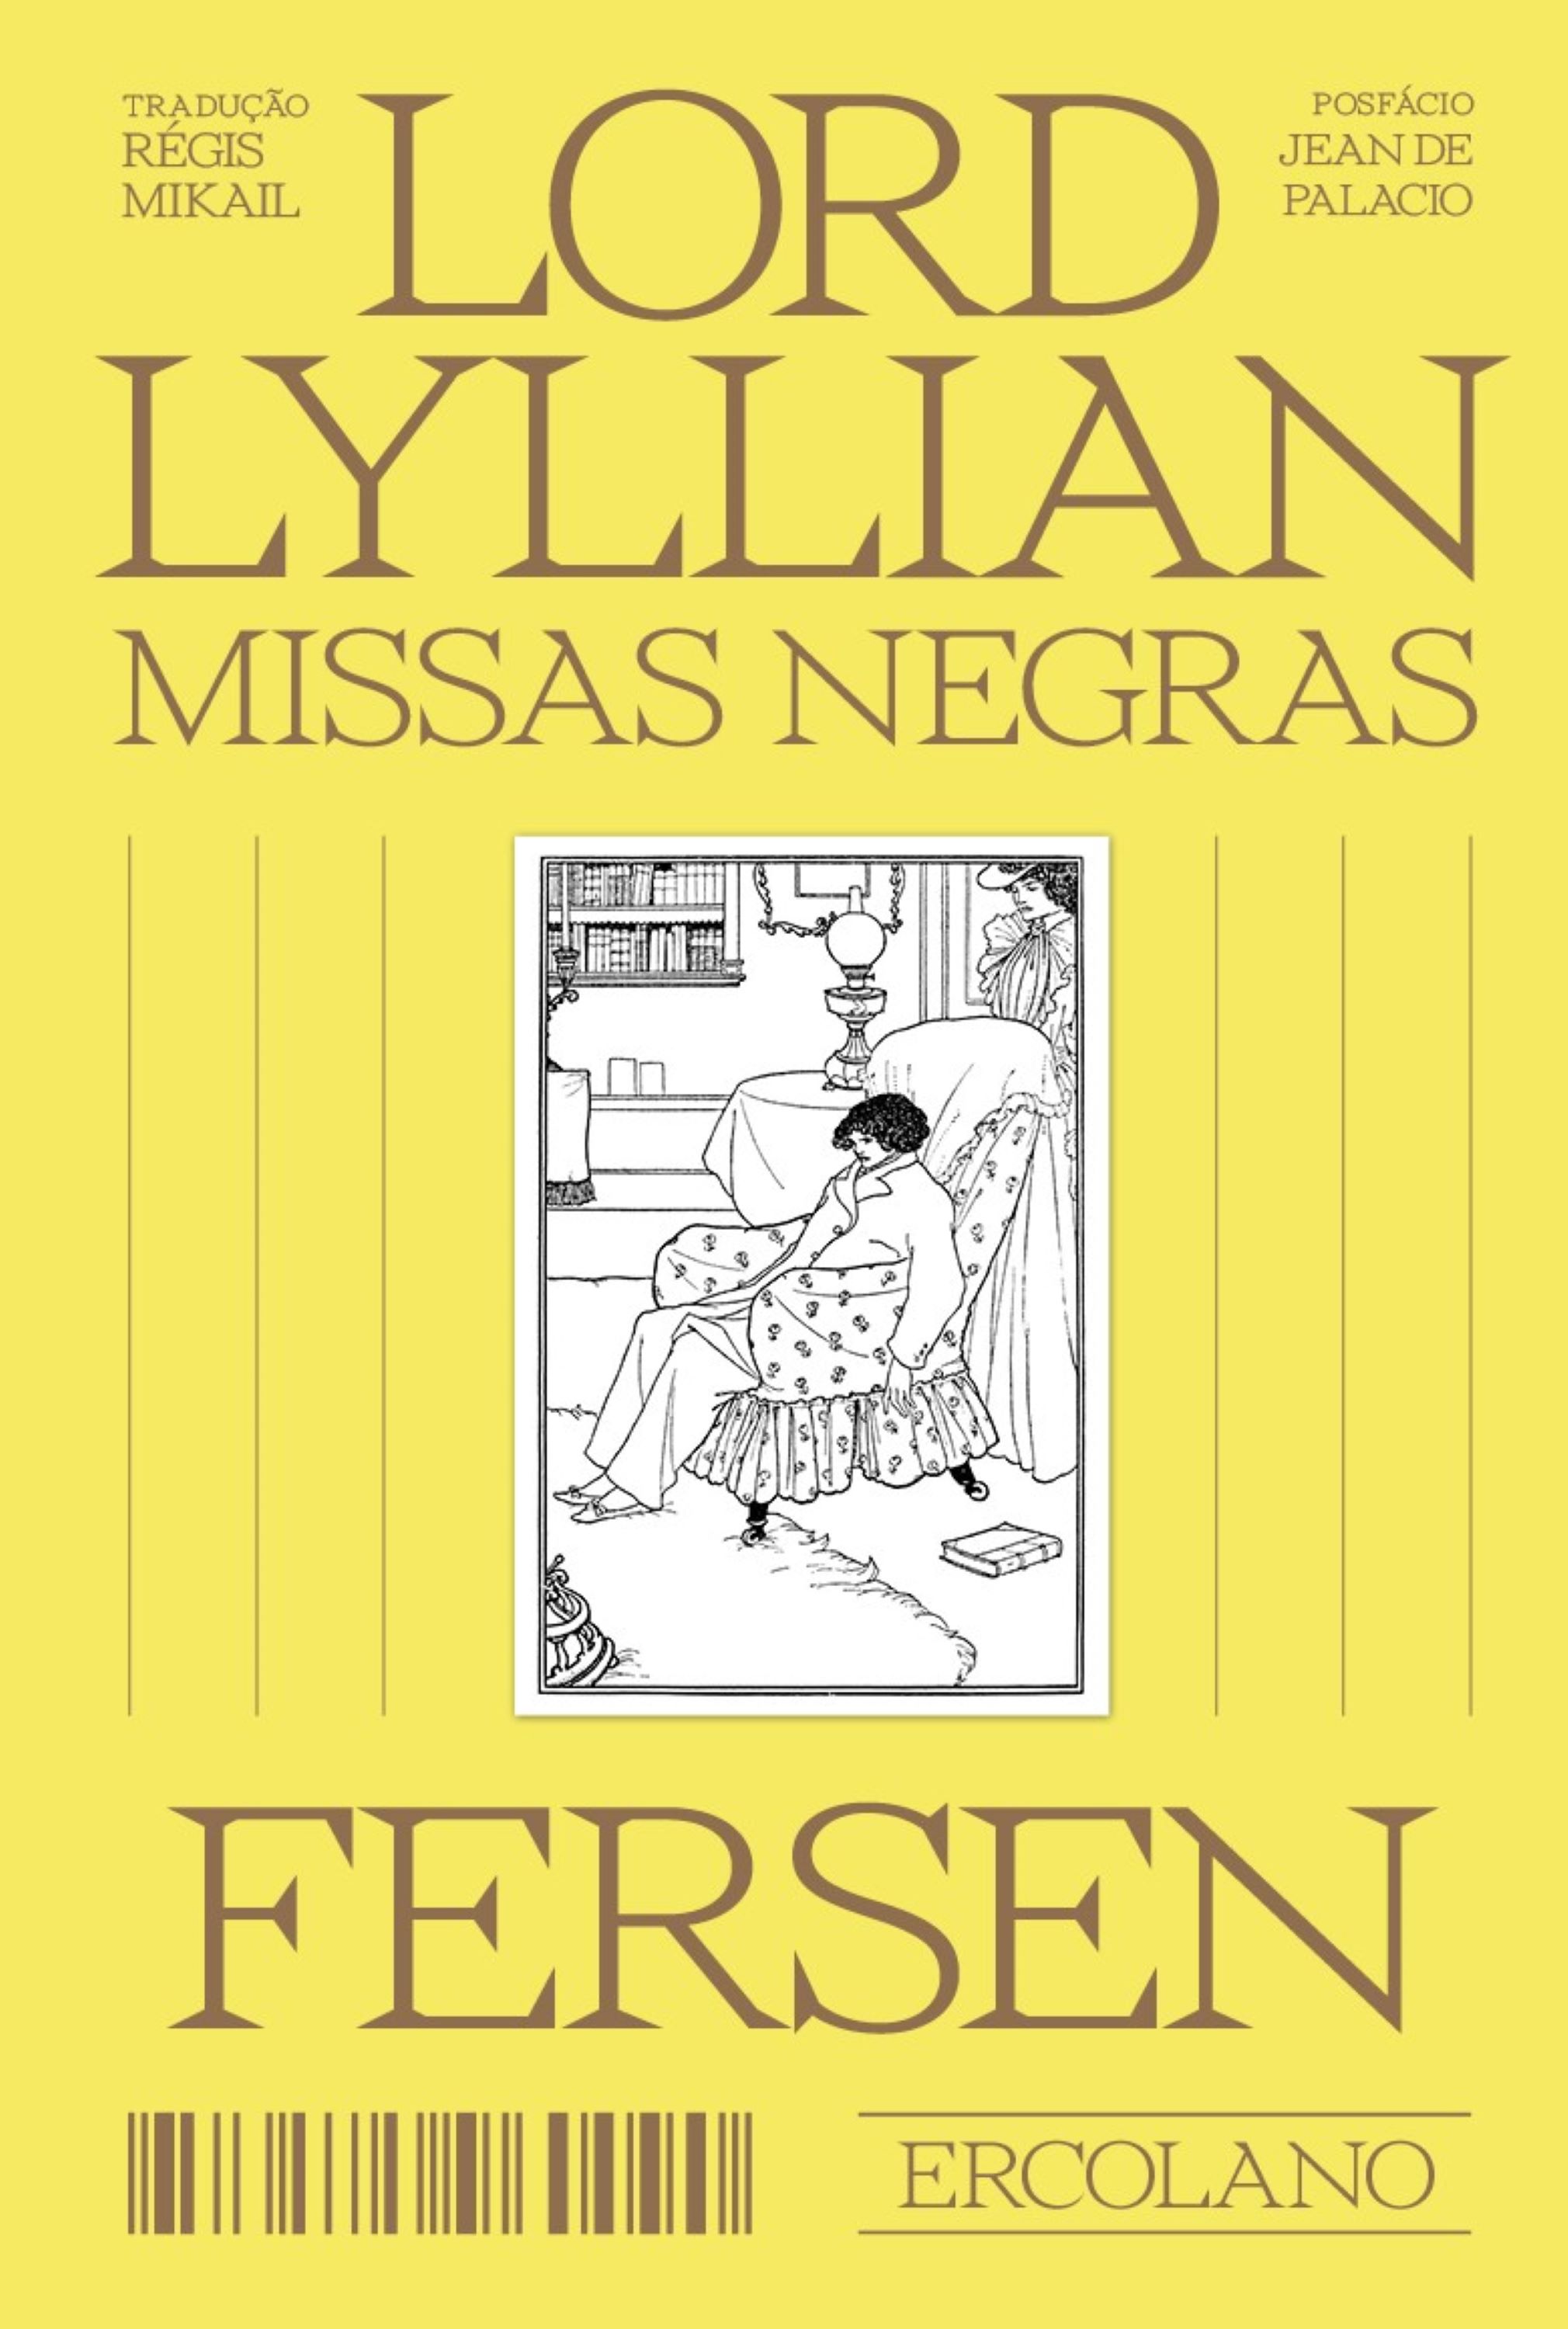 Lord Lyllian - missas negras